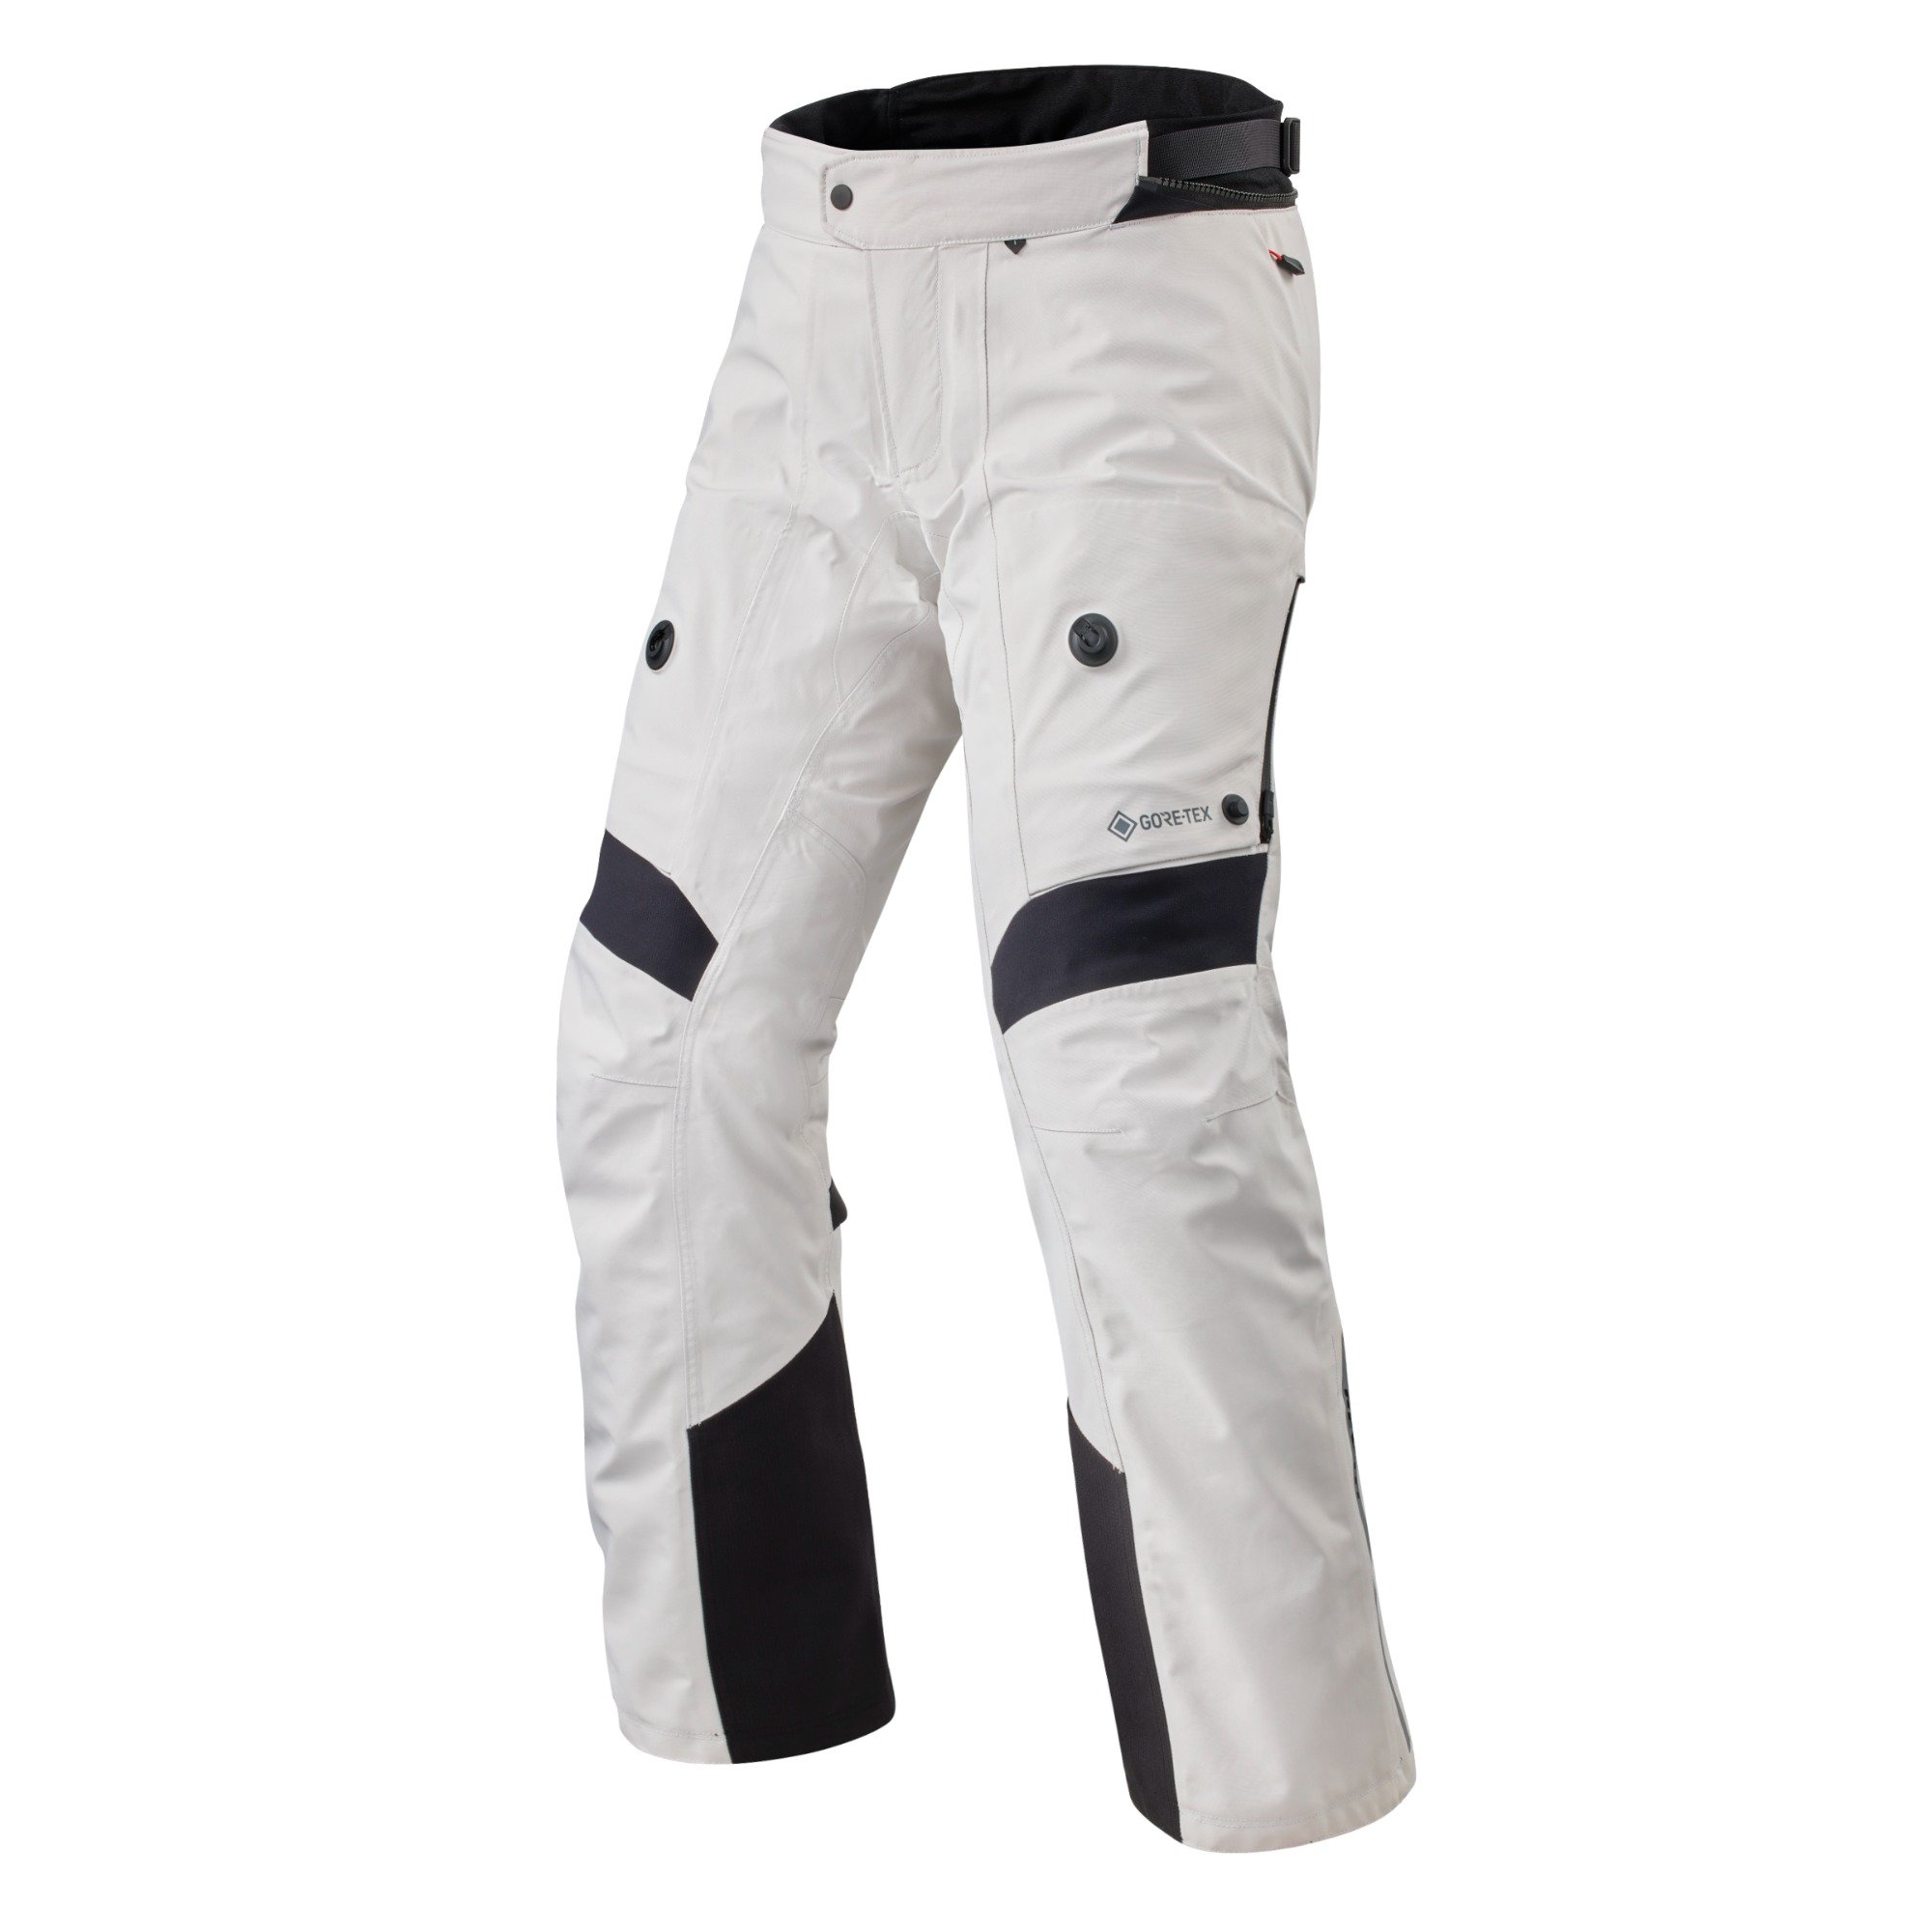 Image of REV'IT! Pants Poseidon 3 GTX Silver Black Standard Motorcycle Pants Talla 3XL